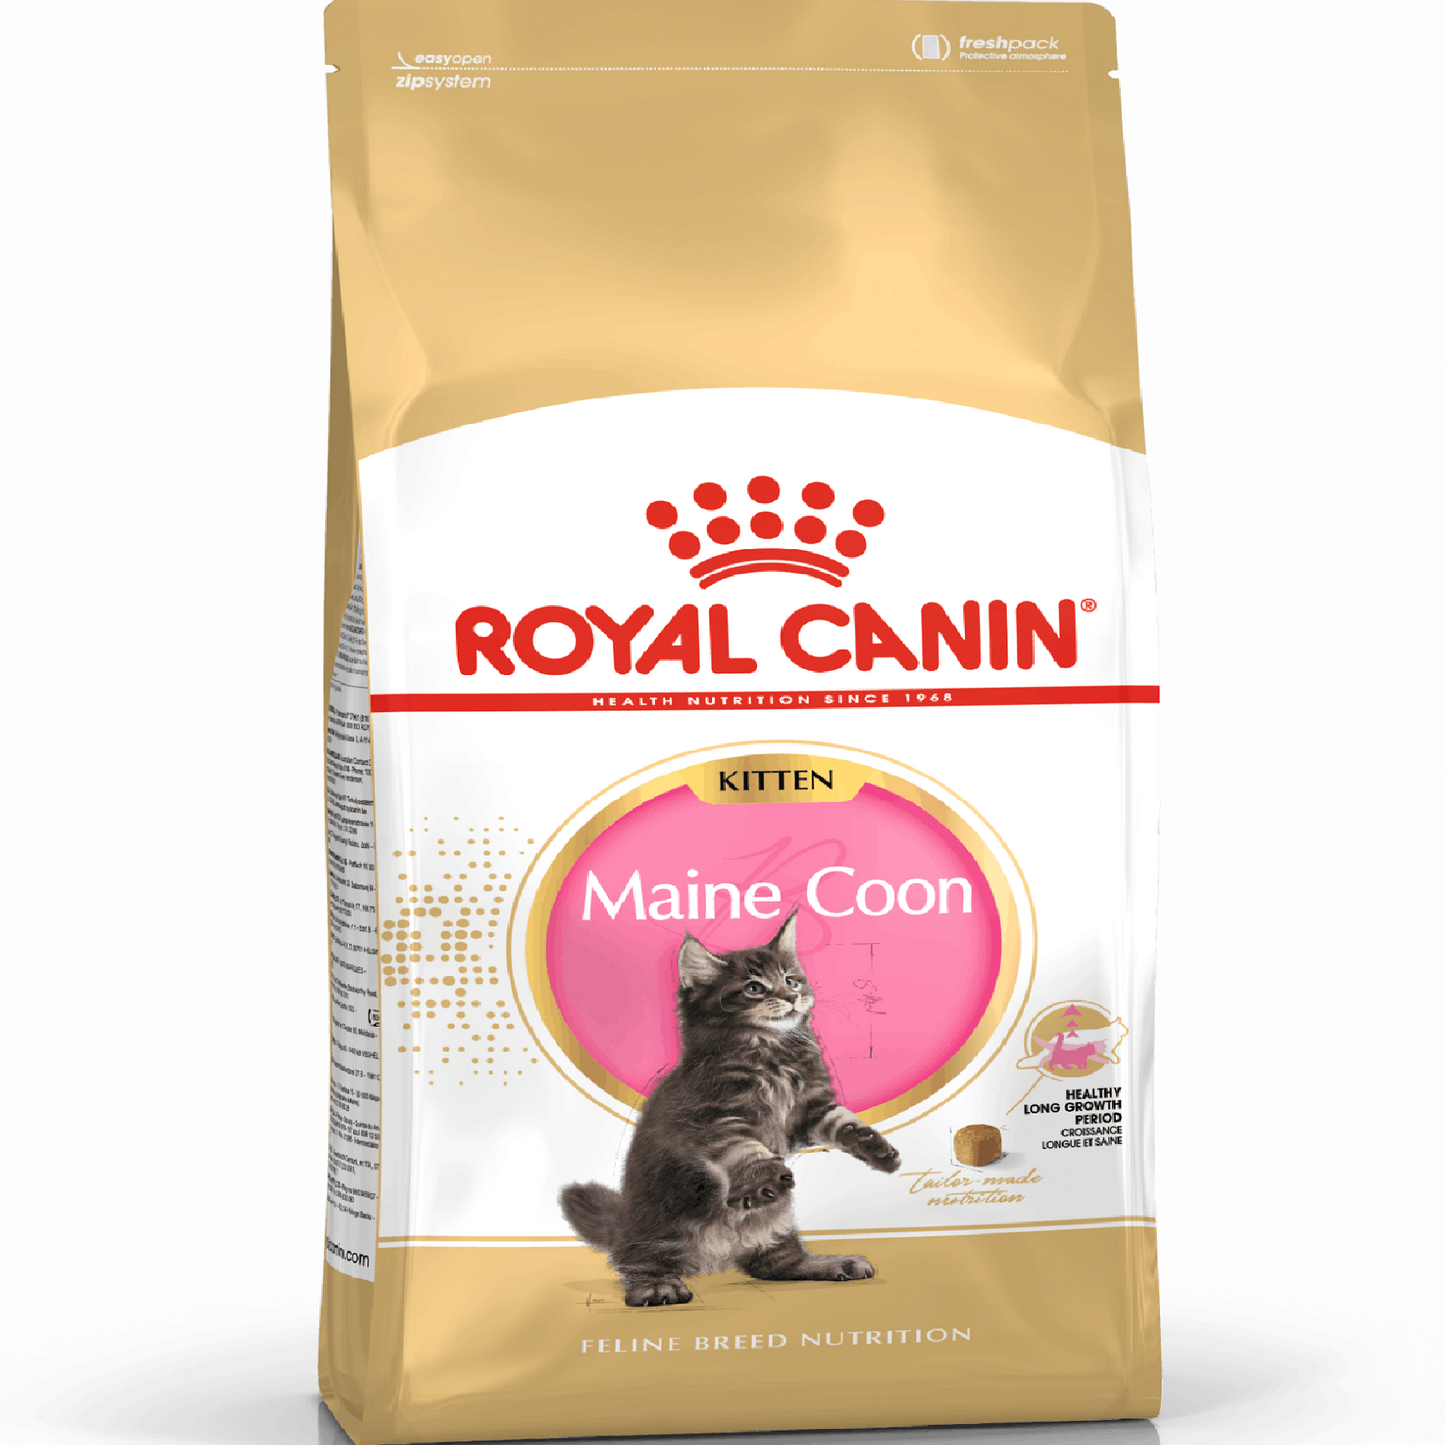 ROYAL CANIN - Maine Coon Kitten